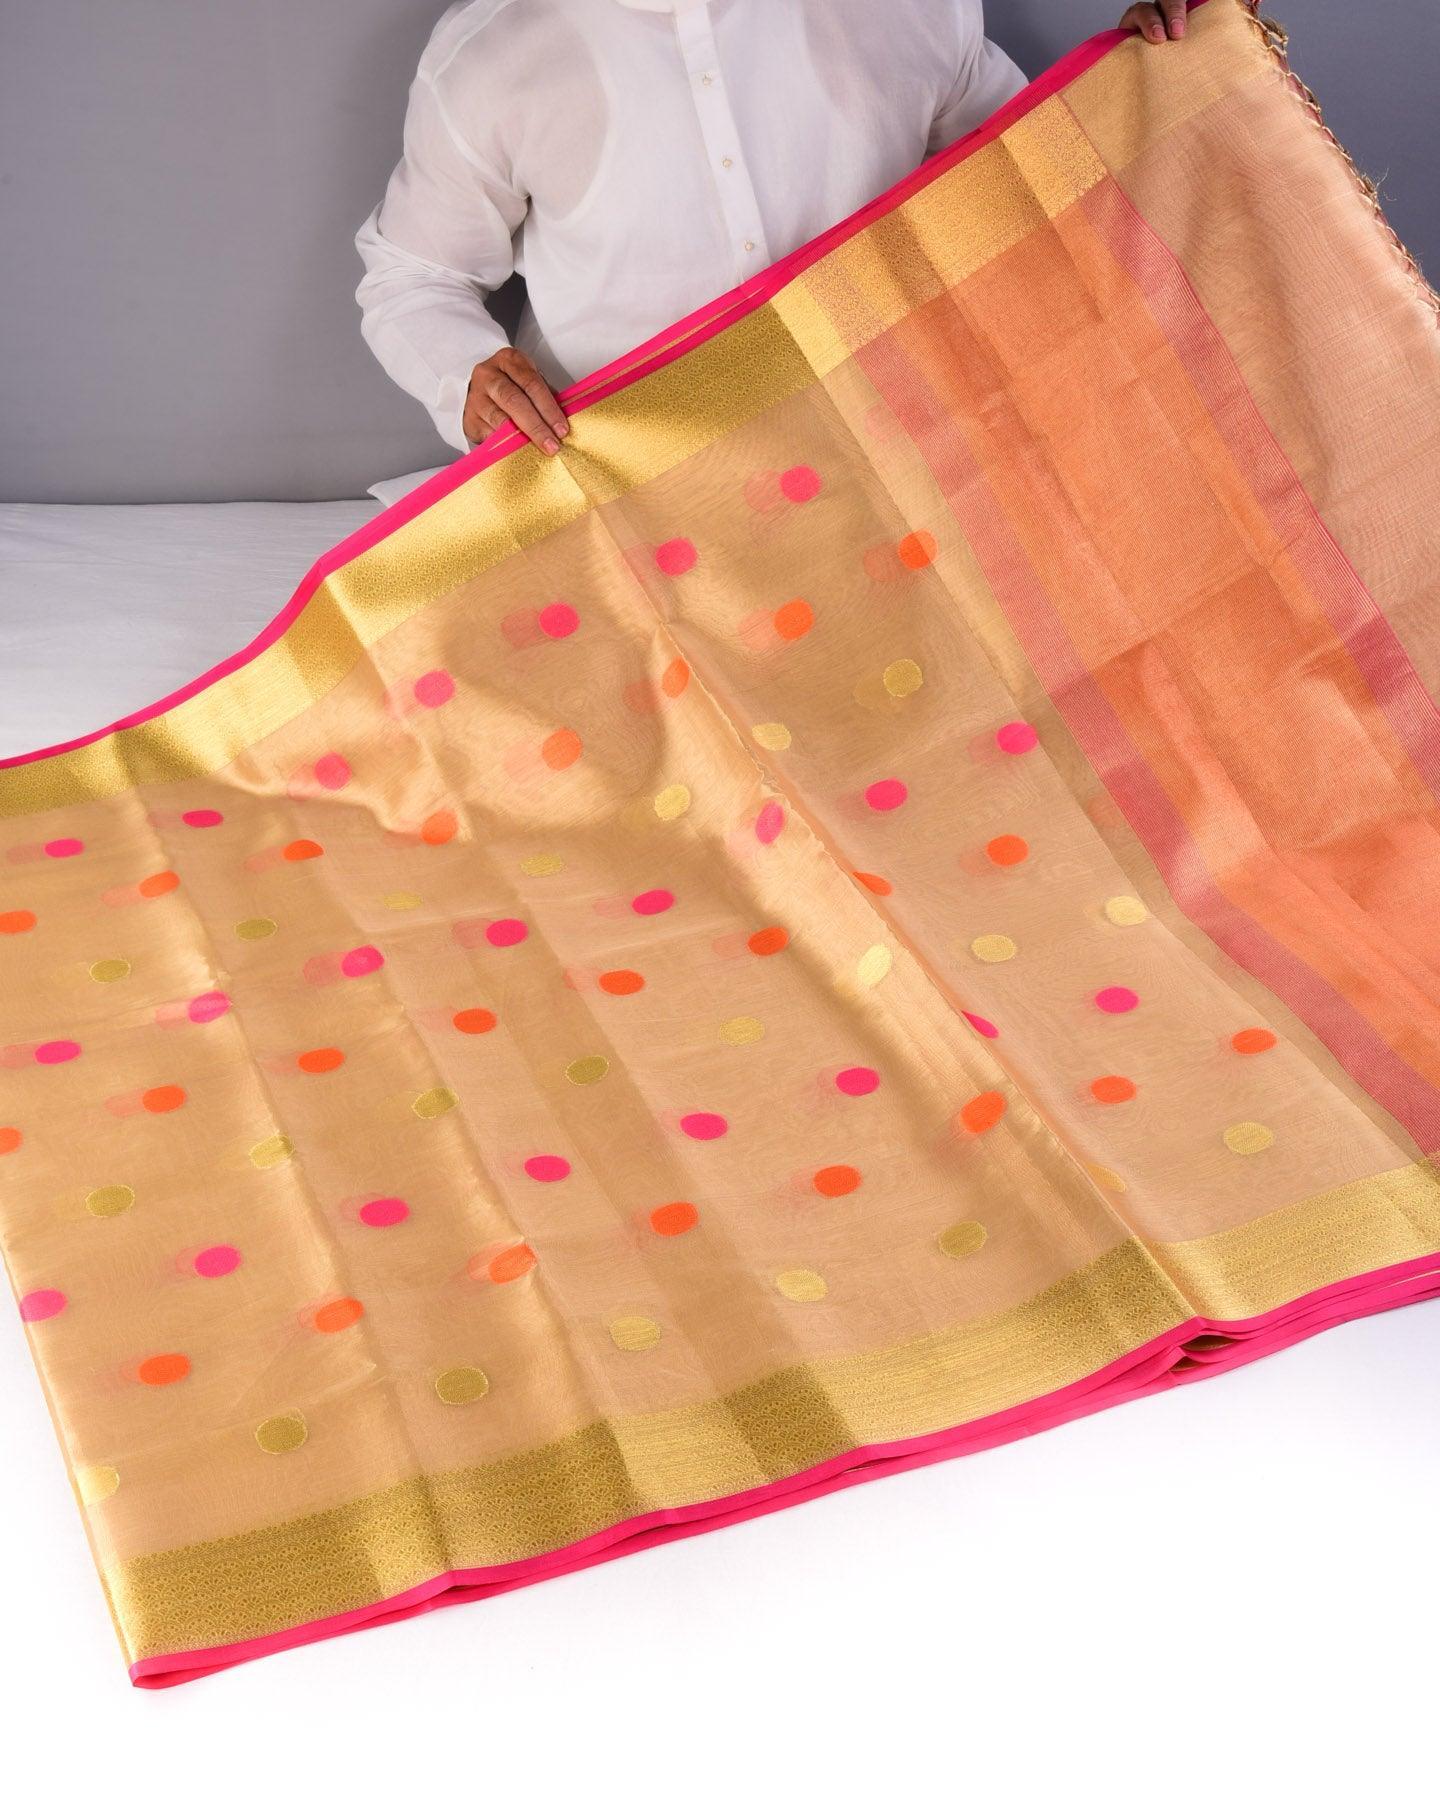 Metallic Gold Banarasi Polka Buti Cutwork Brocade Woven Art Cotton Tissue Saree - By HolyWeaves, Benares